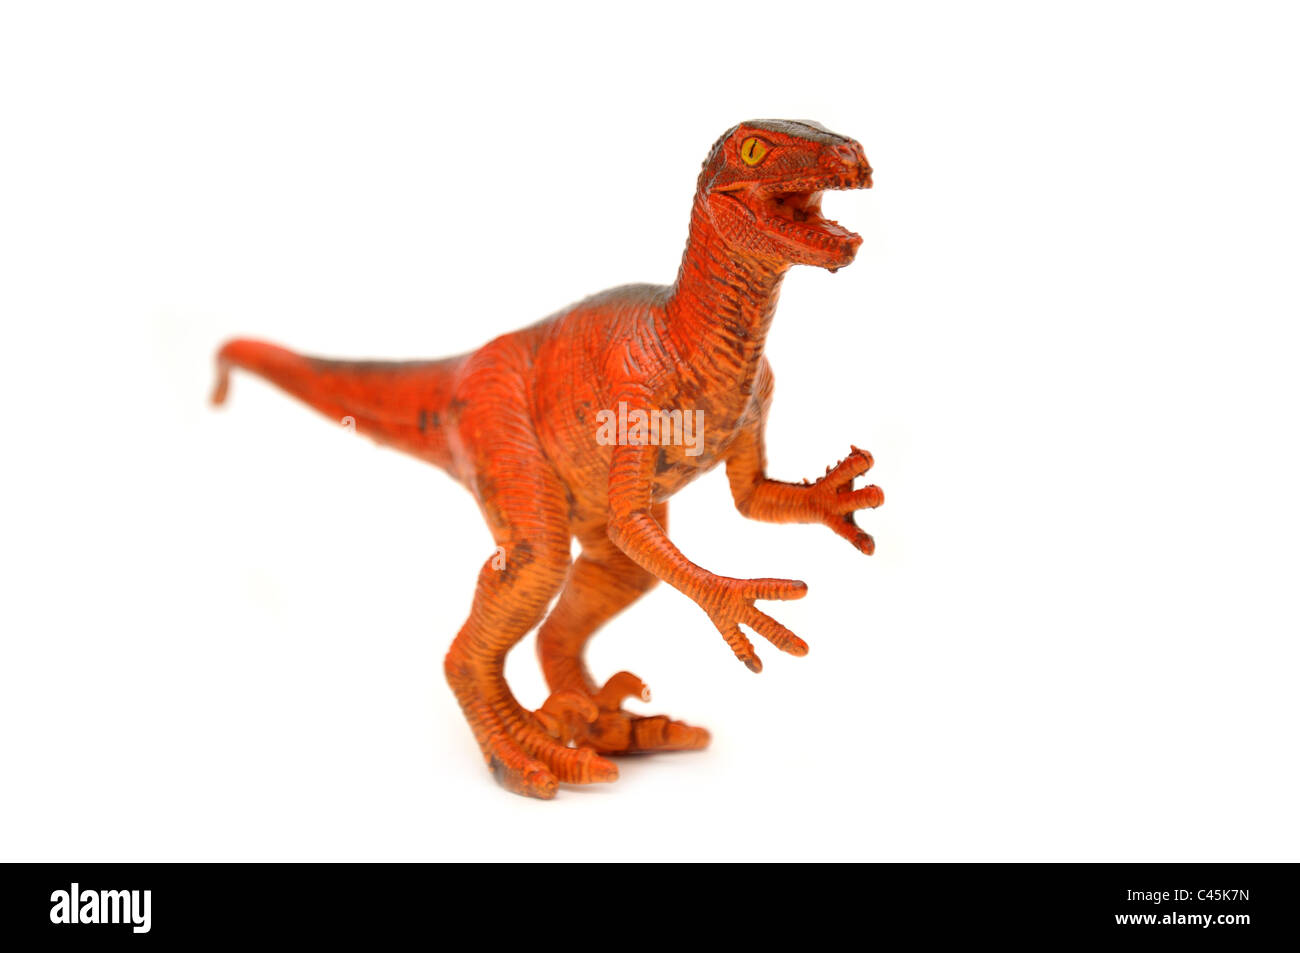 Juguete de dinosaurio fotografías e imágenes de alta resolución - Alamy